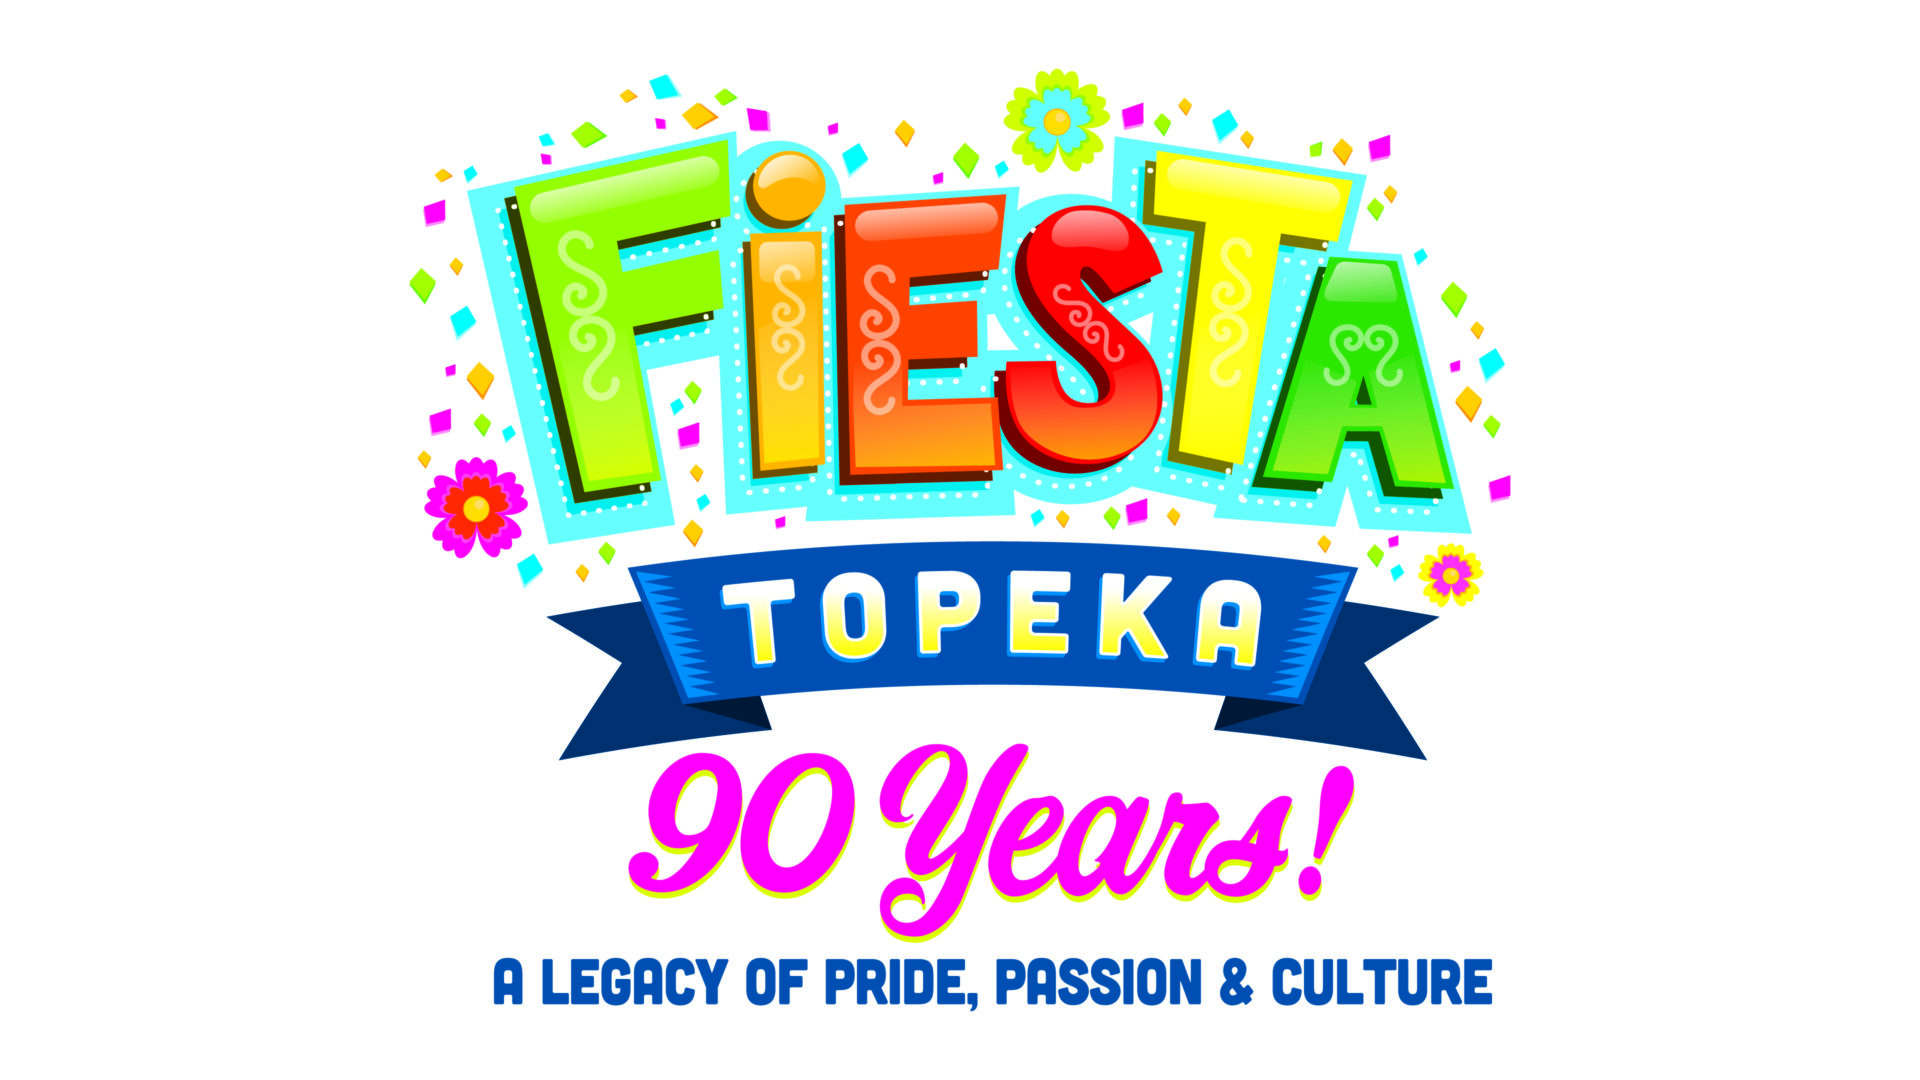 fiesta-topeka-90years